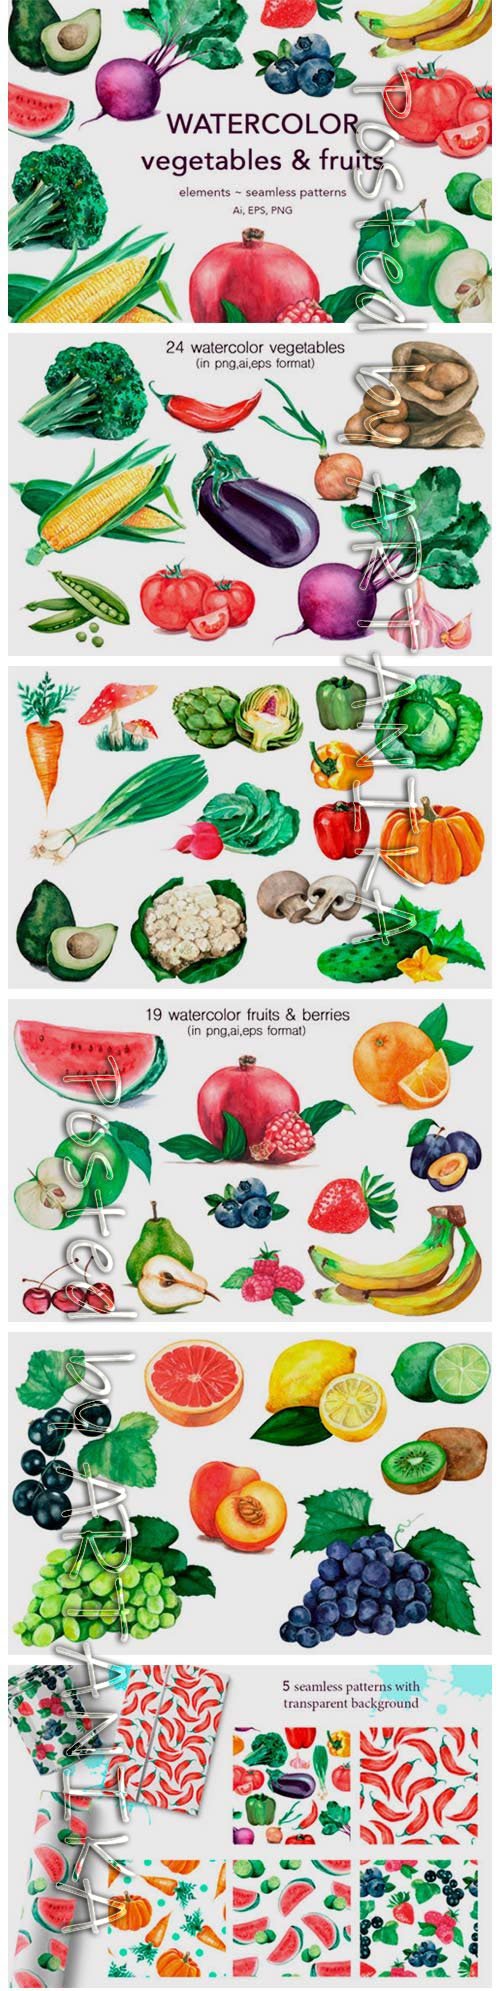 Watercolor Vegetables & Fruits 2151243